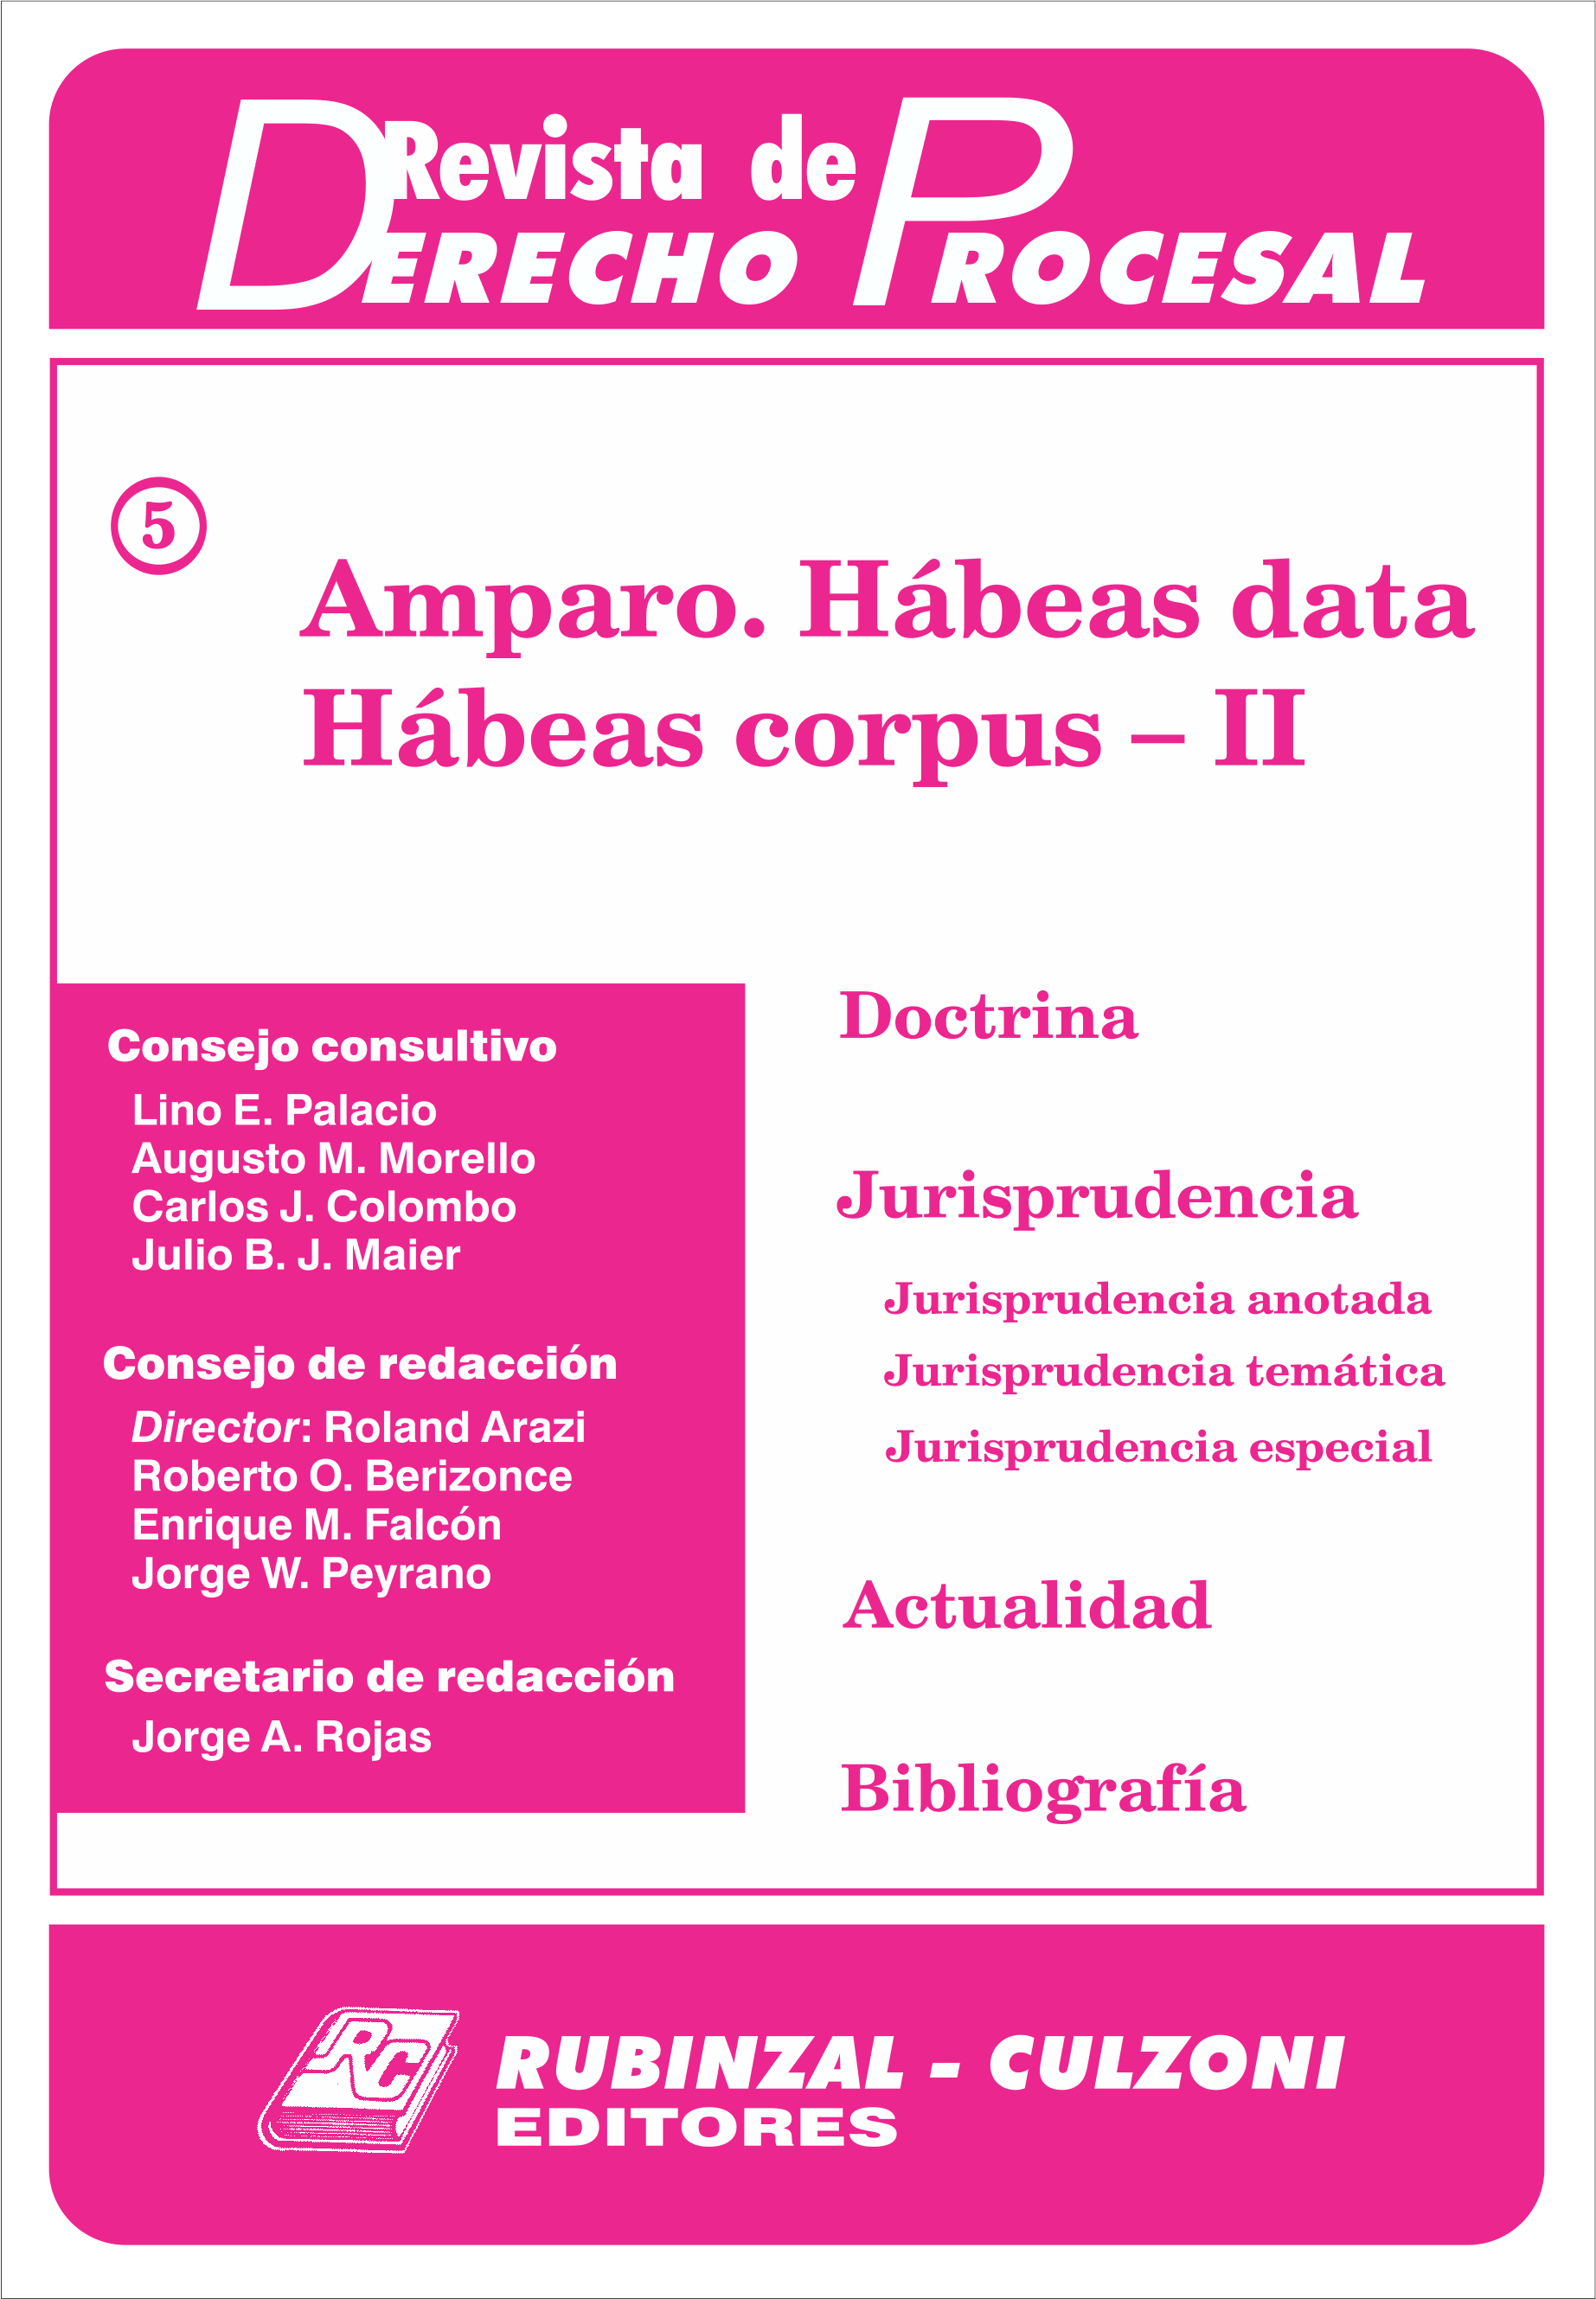 Revista de Derecho Procesal - Amparo. Hábeas data. Hábeas corpus - II.